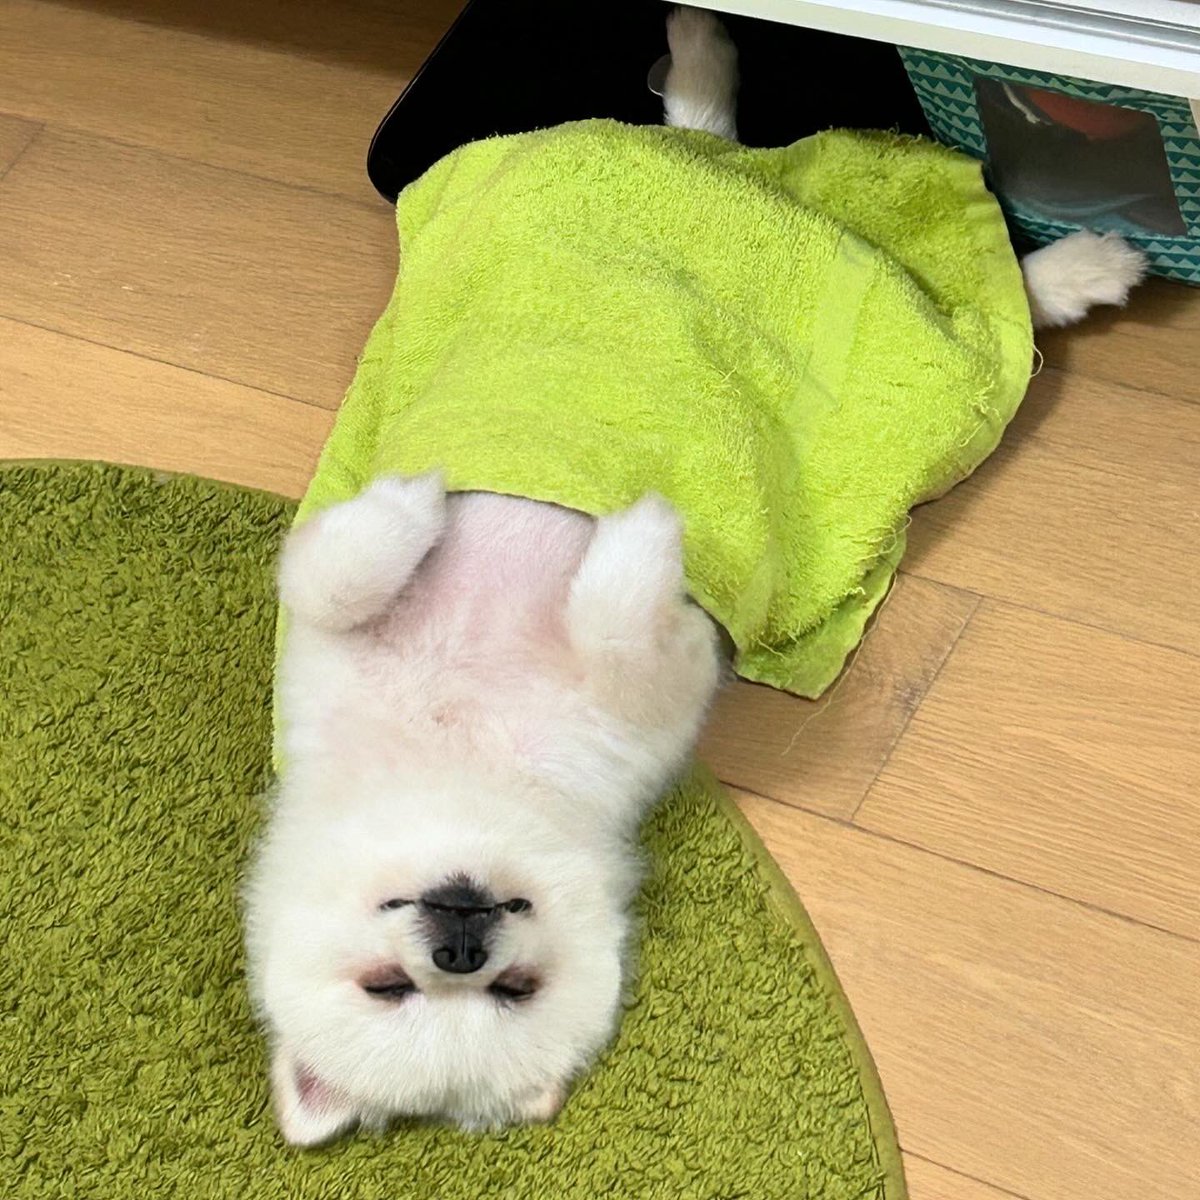 🐶gets sleepy and fall asleep quickly😪
#sleepydog #fallasleep 
#pomeranian #松鼠狗 #dogsoftwitter #dogsofx  #petstagram #pom #博美犬 #doge #hkdog #포메라니안  #pigopompom #ポメラニアン #perro #doglover #doggies #香港狗狗 #cutedog #puppy #pet